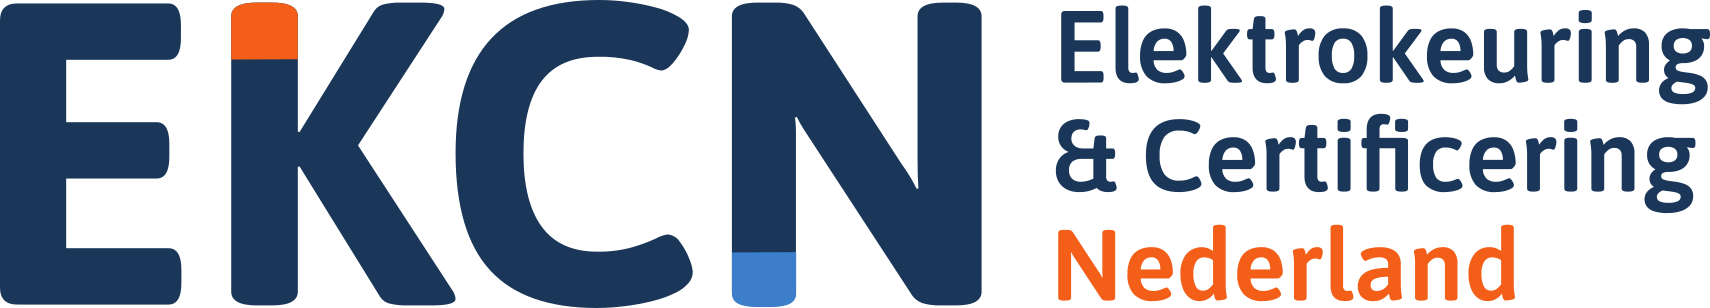 Incontorl-klant-EKCN-logo